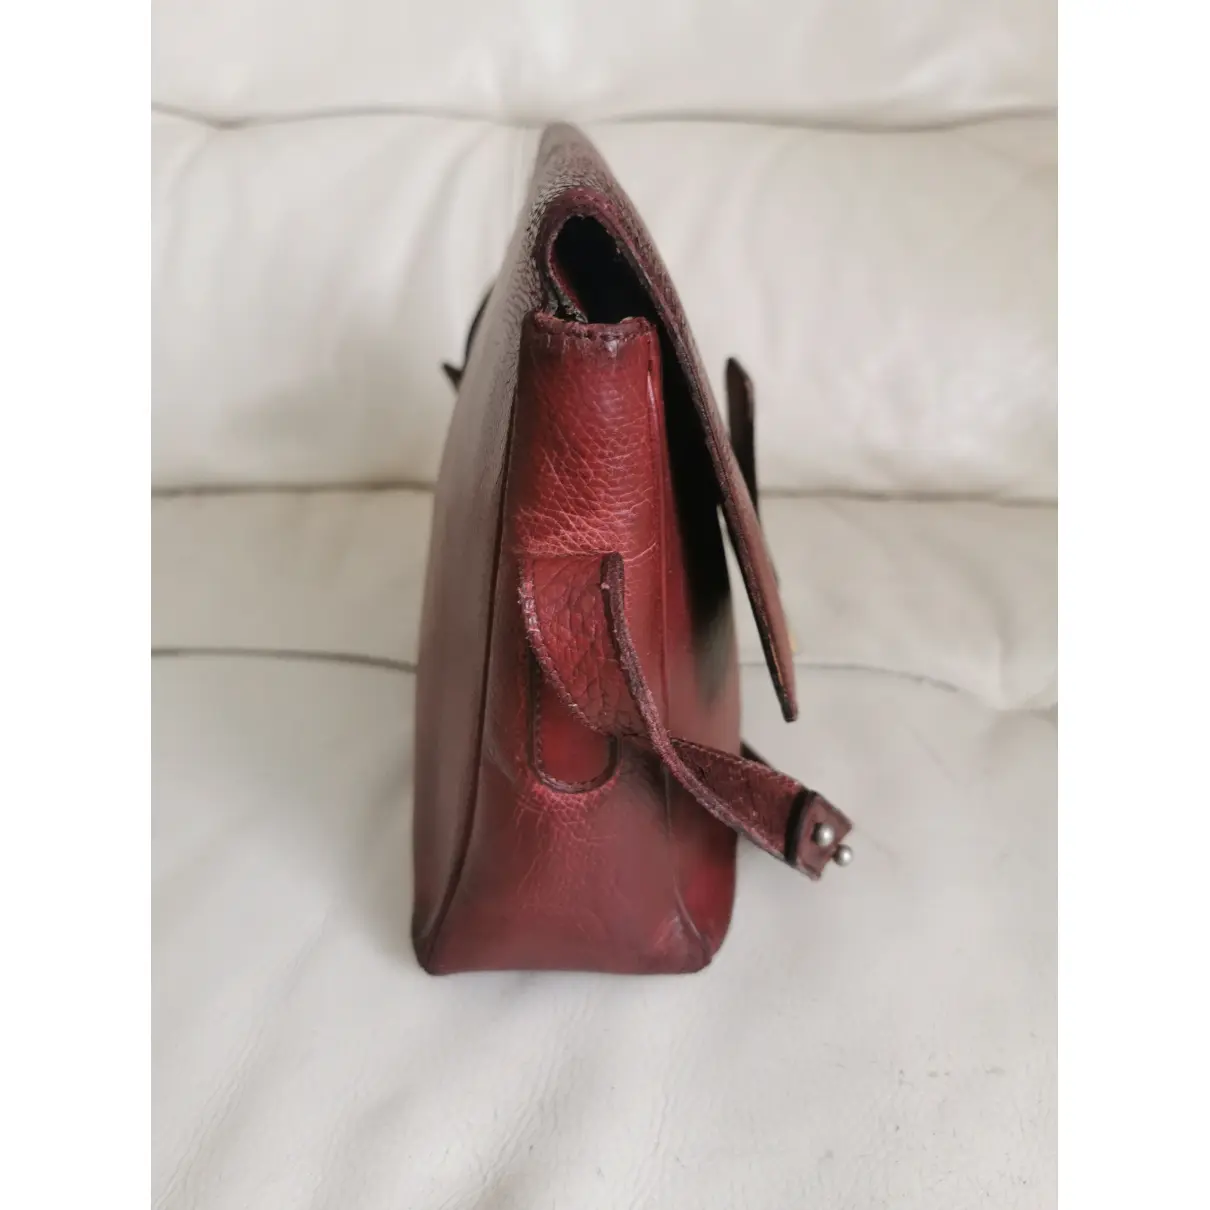 Madame leather handbag Delvaux